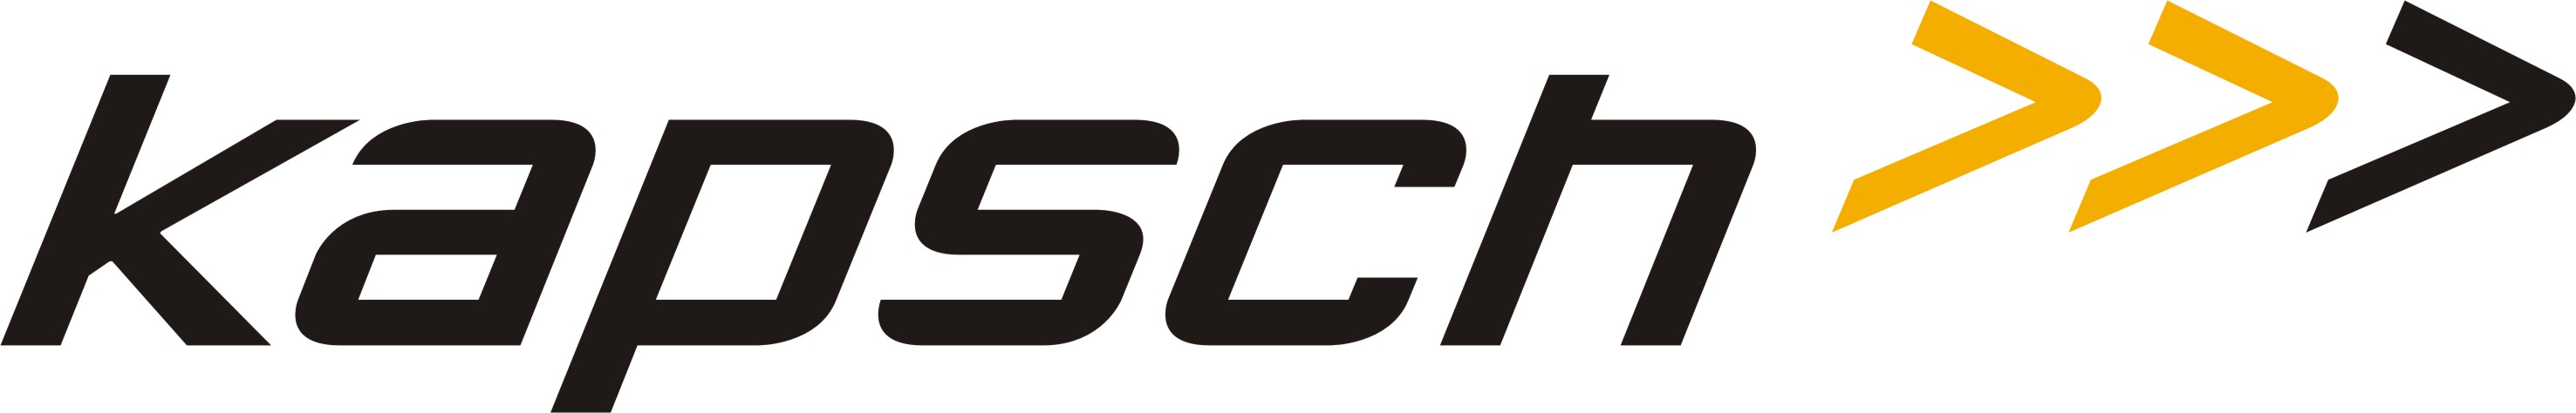 Kapsch Logo photo - 1